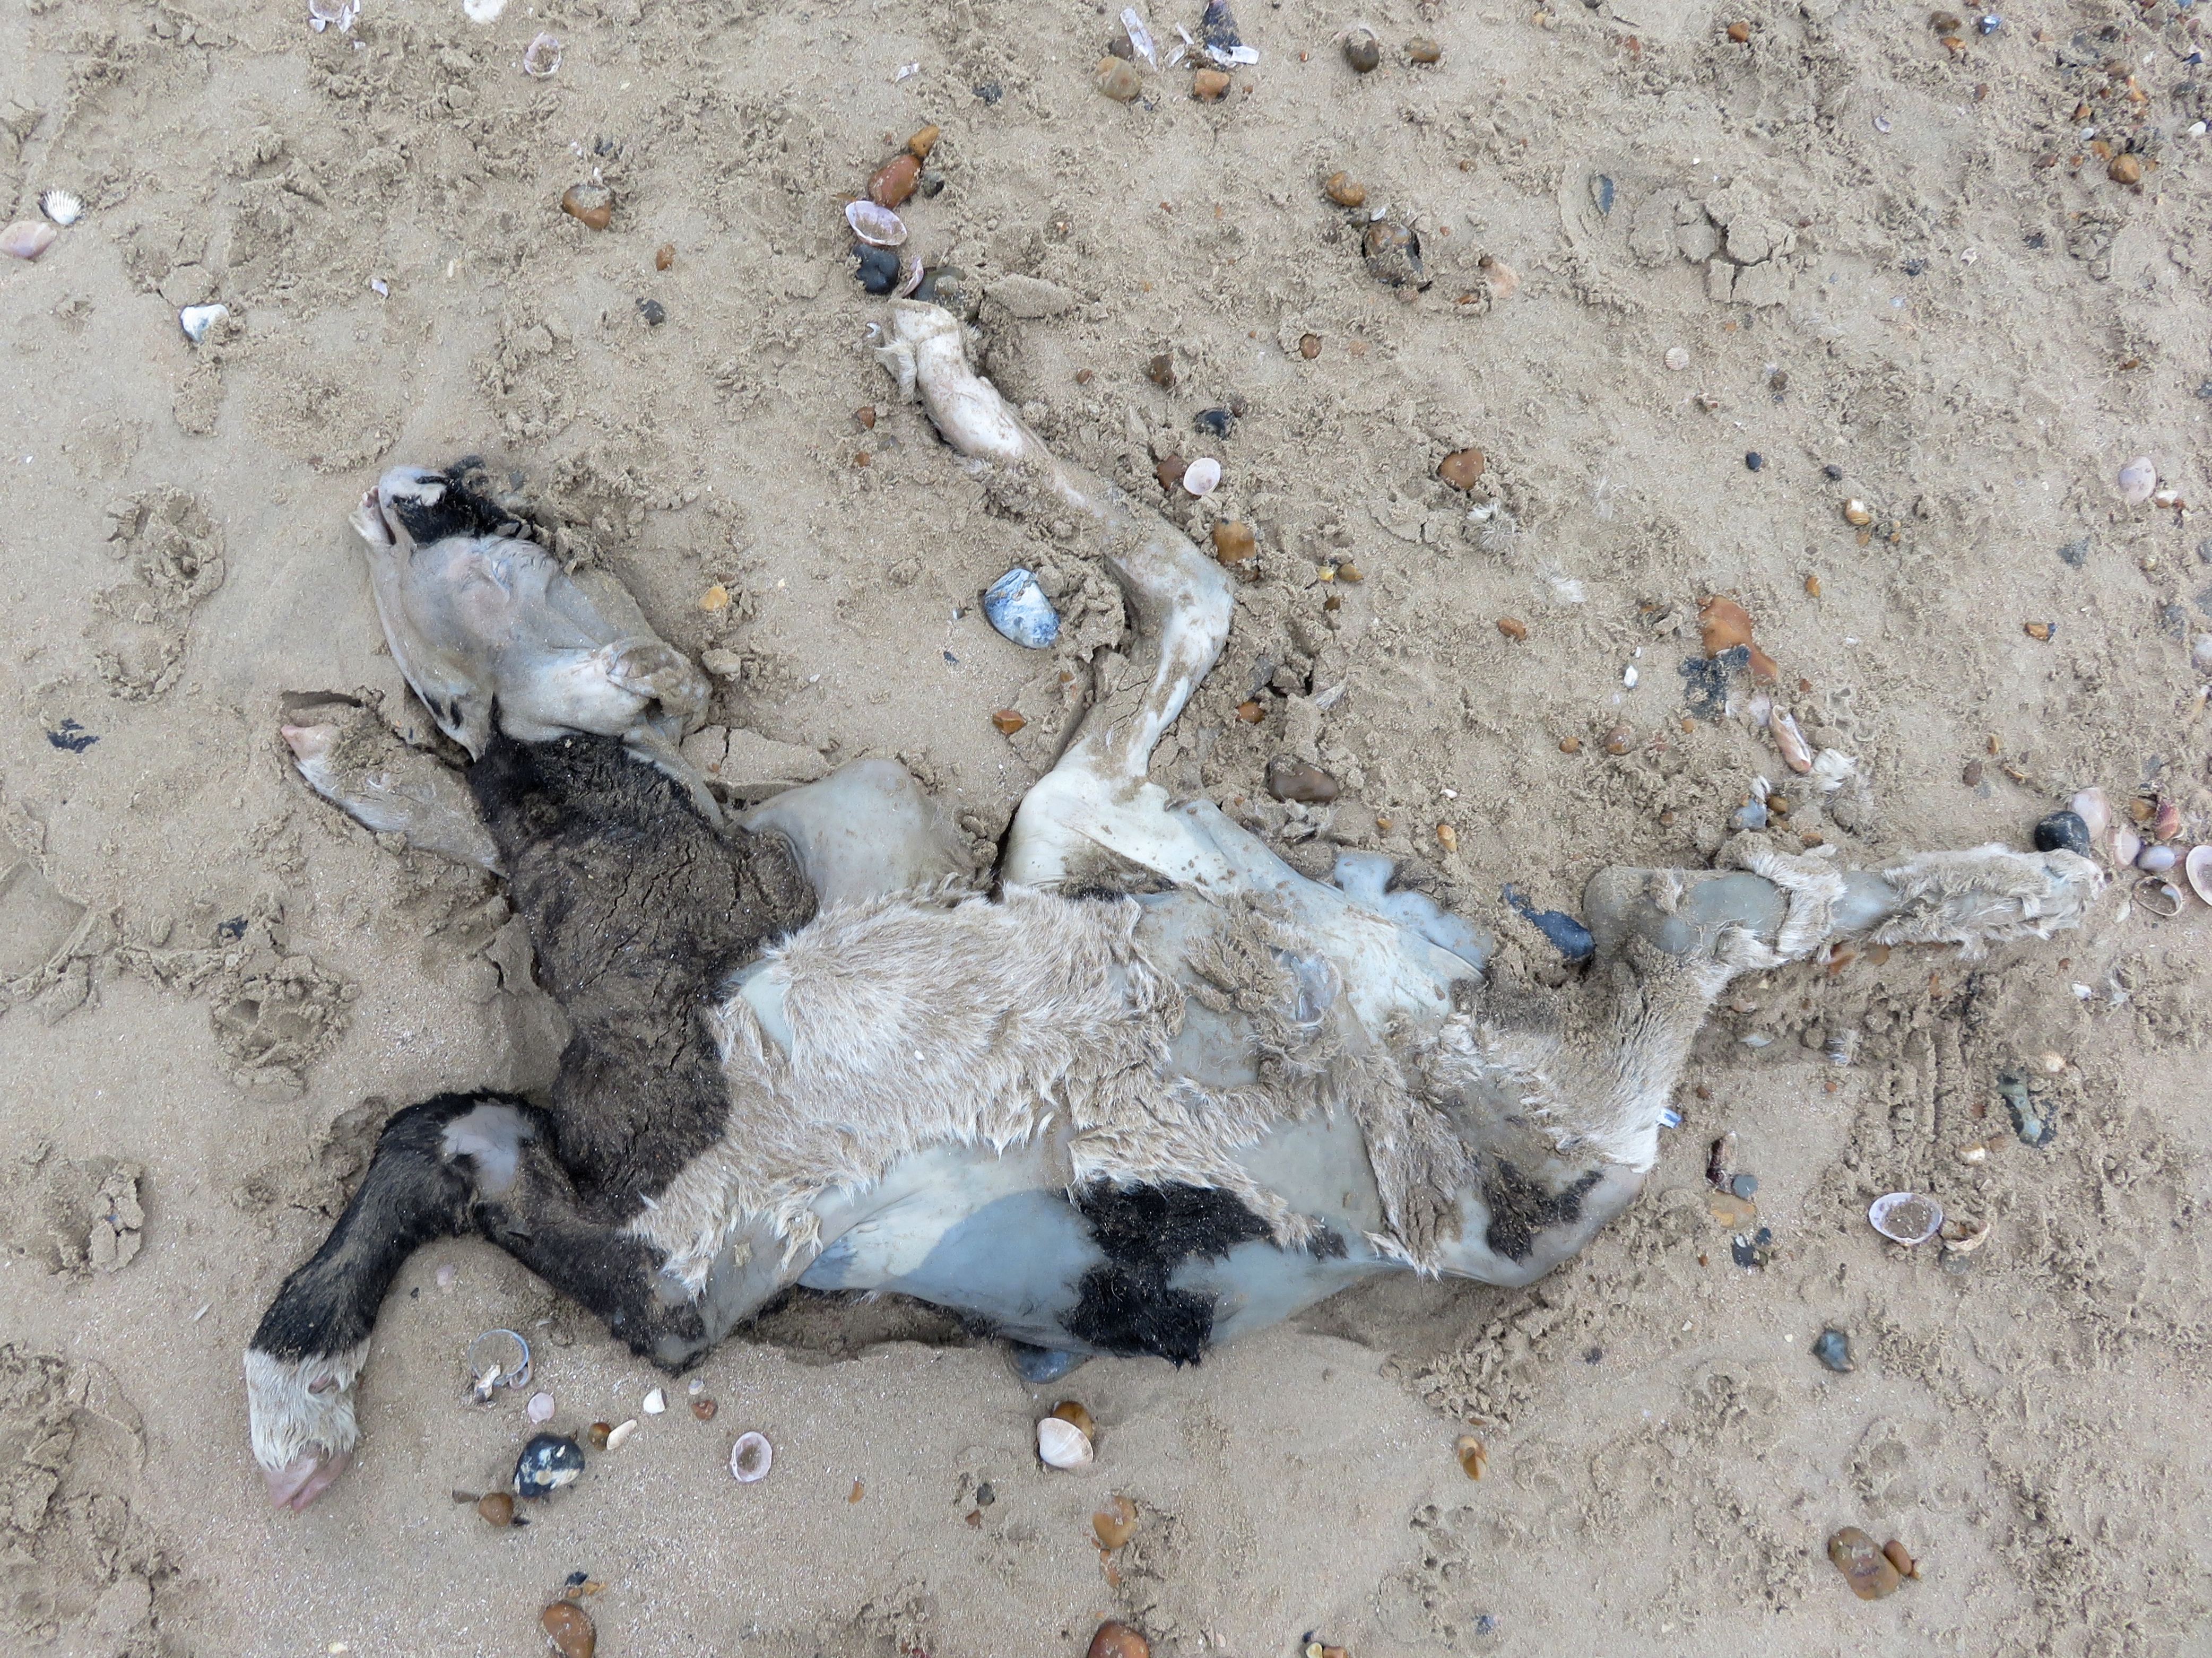 dead calf in sand